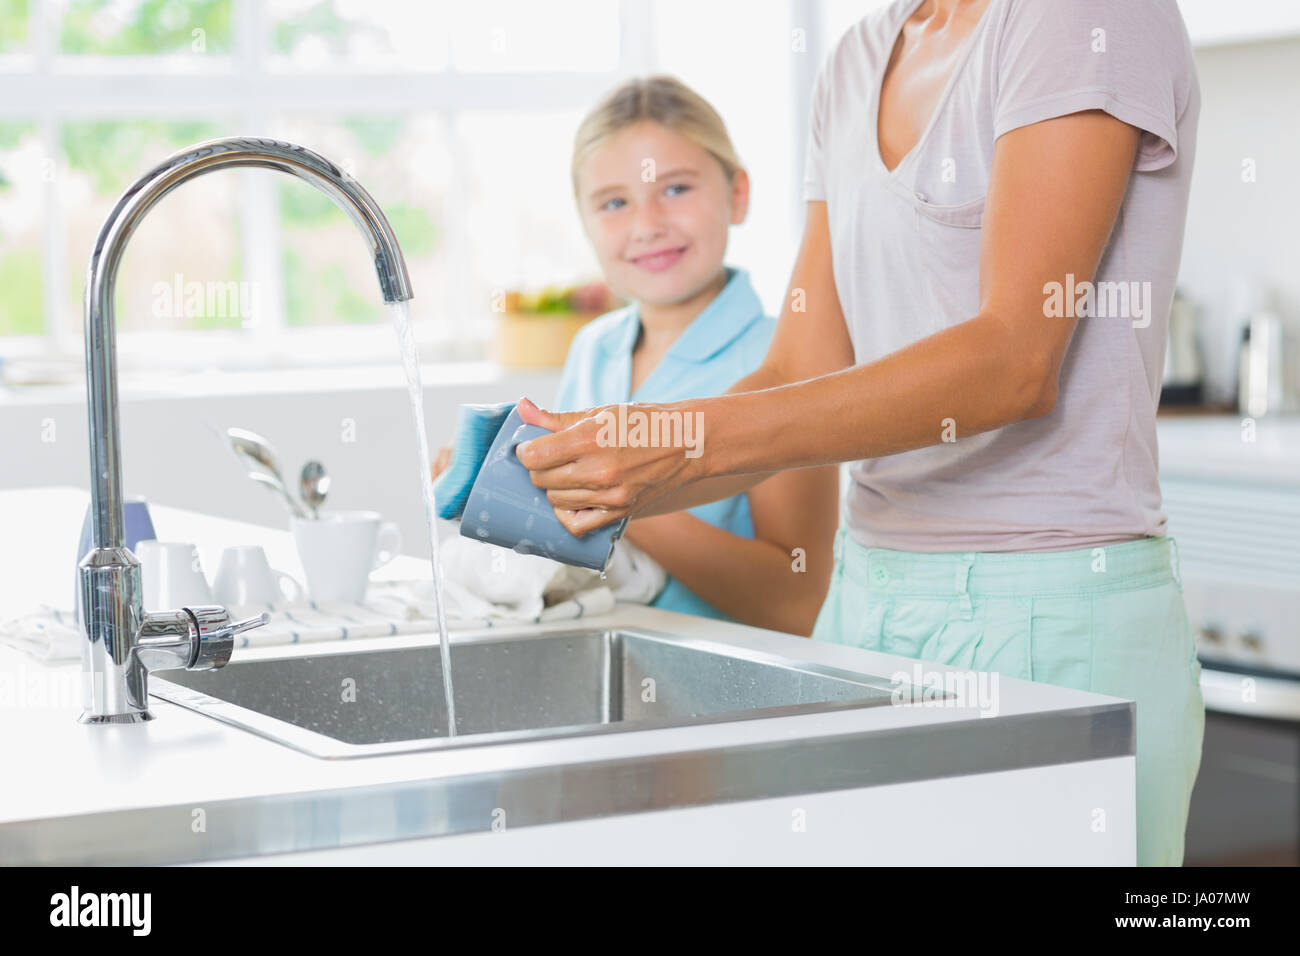 Do the washing предложения. Мытье посуды. Do washing up картинки. Женщина моющая посуду. Картинки мытье посуды с мамой.